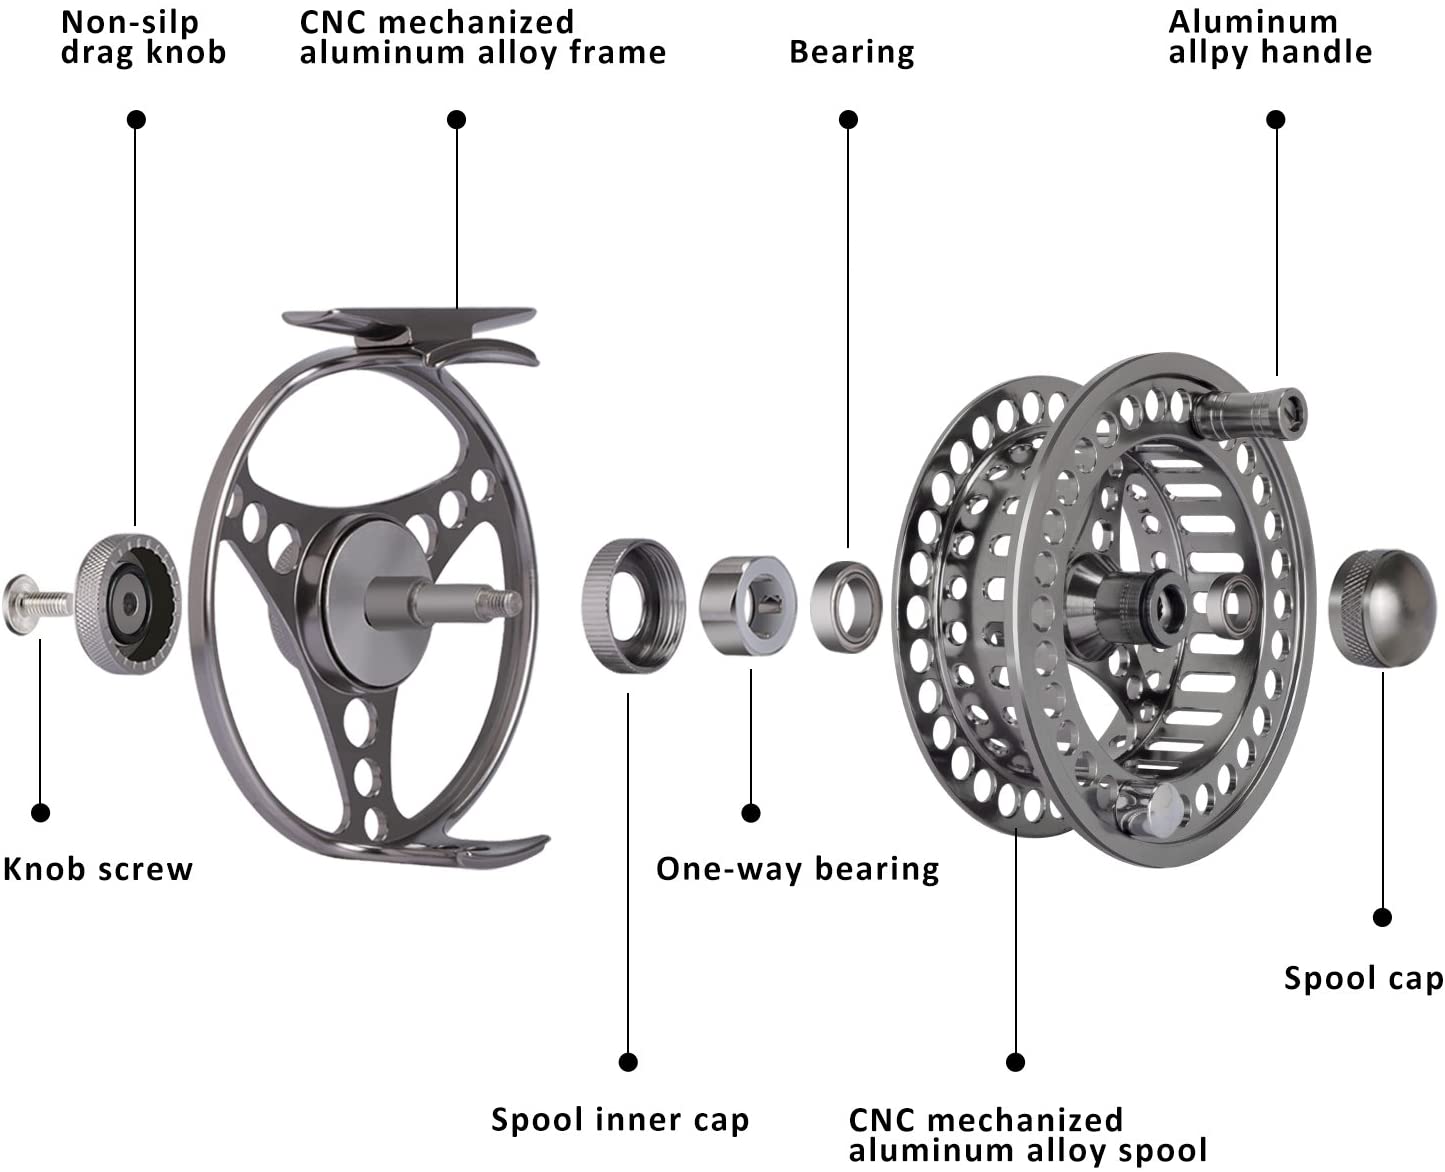 Goture Spinning Reel 3000 Series Fixed Spool Eeel Gear Ratio 5.2:1